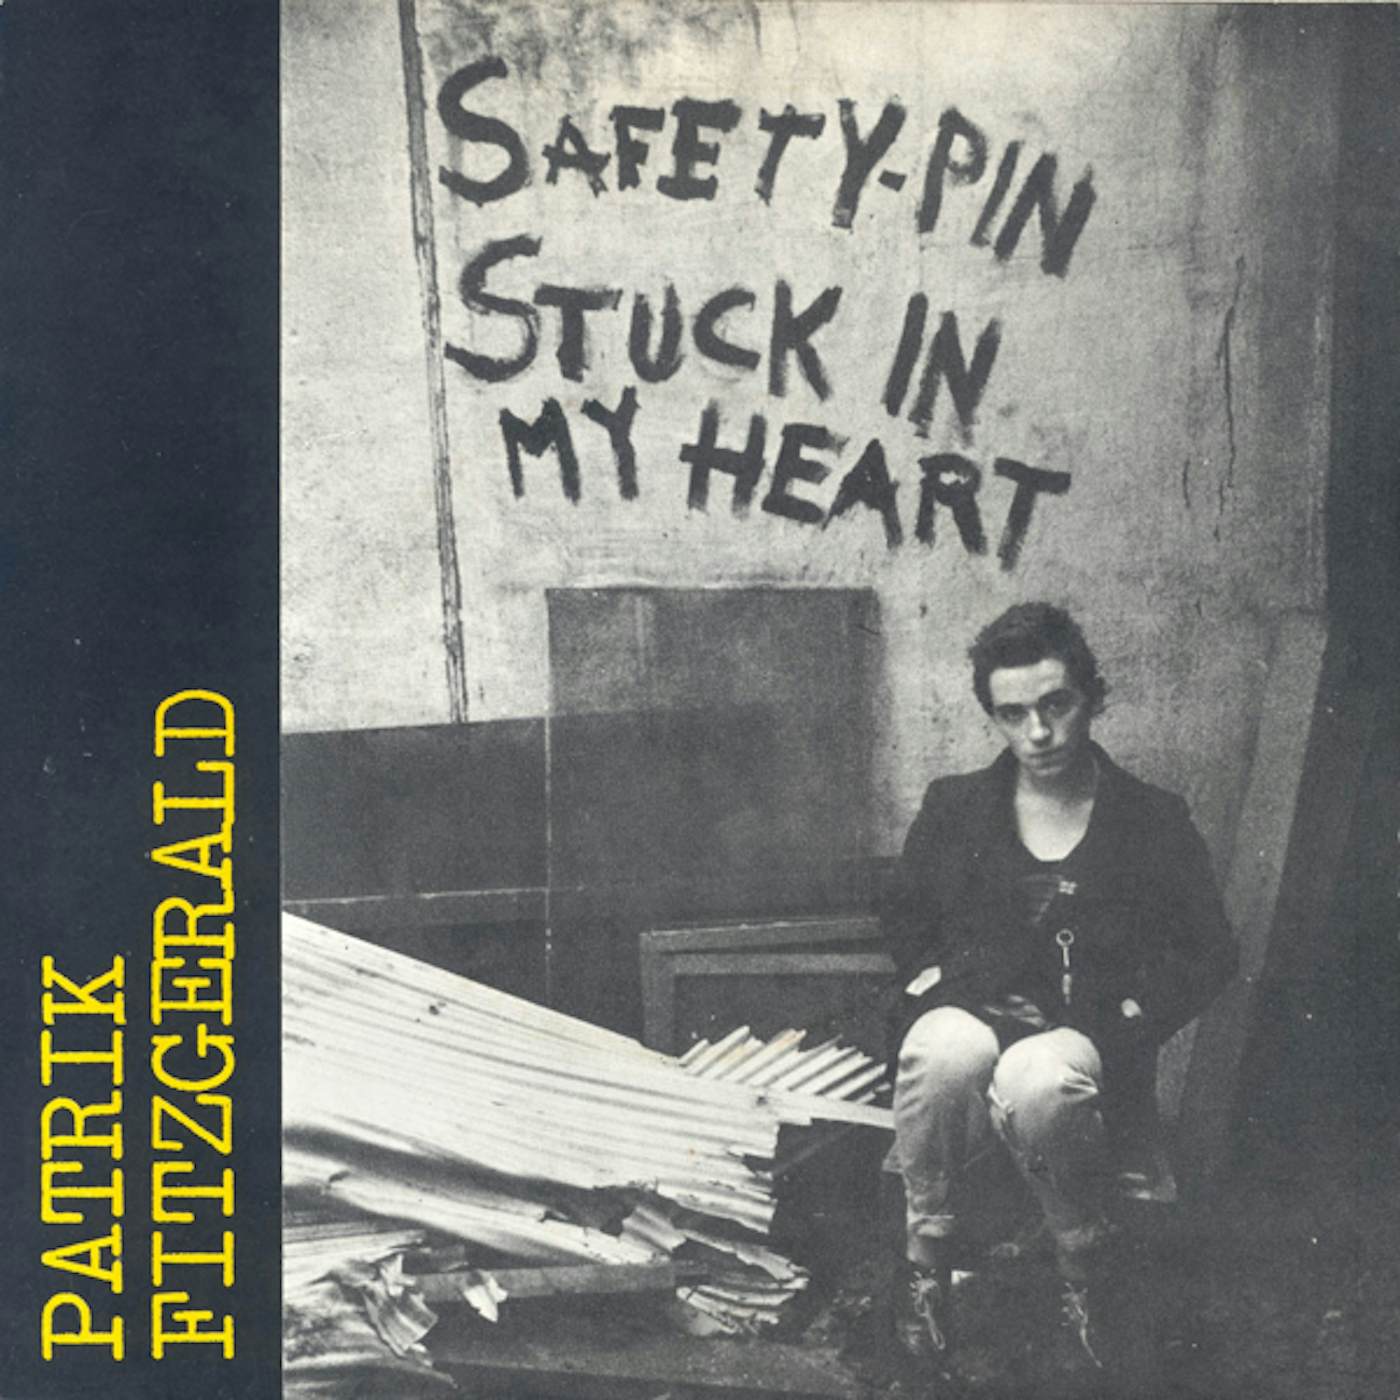 Patrik Fitzgerald SAFETY PIN STUCK IN MY HEART Vinyl Record